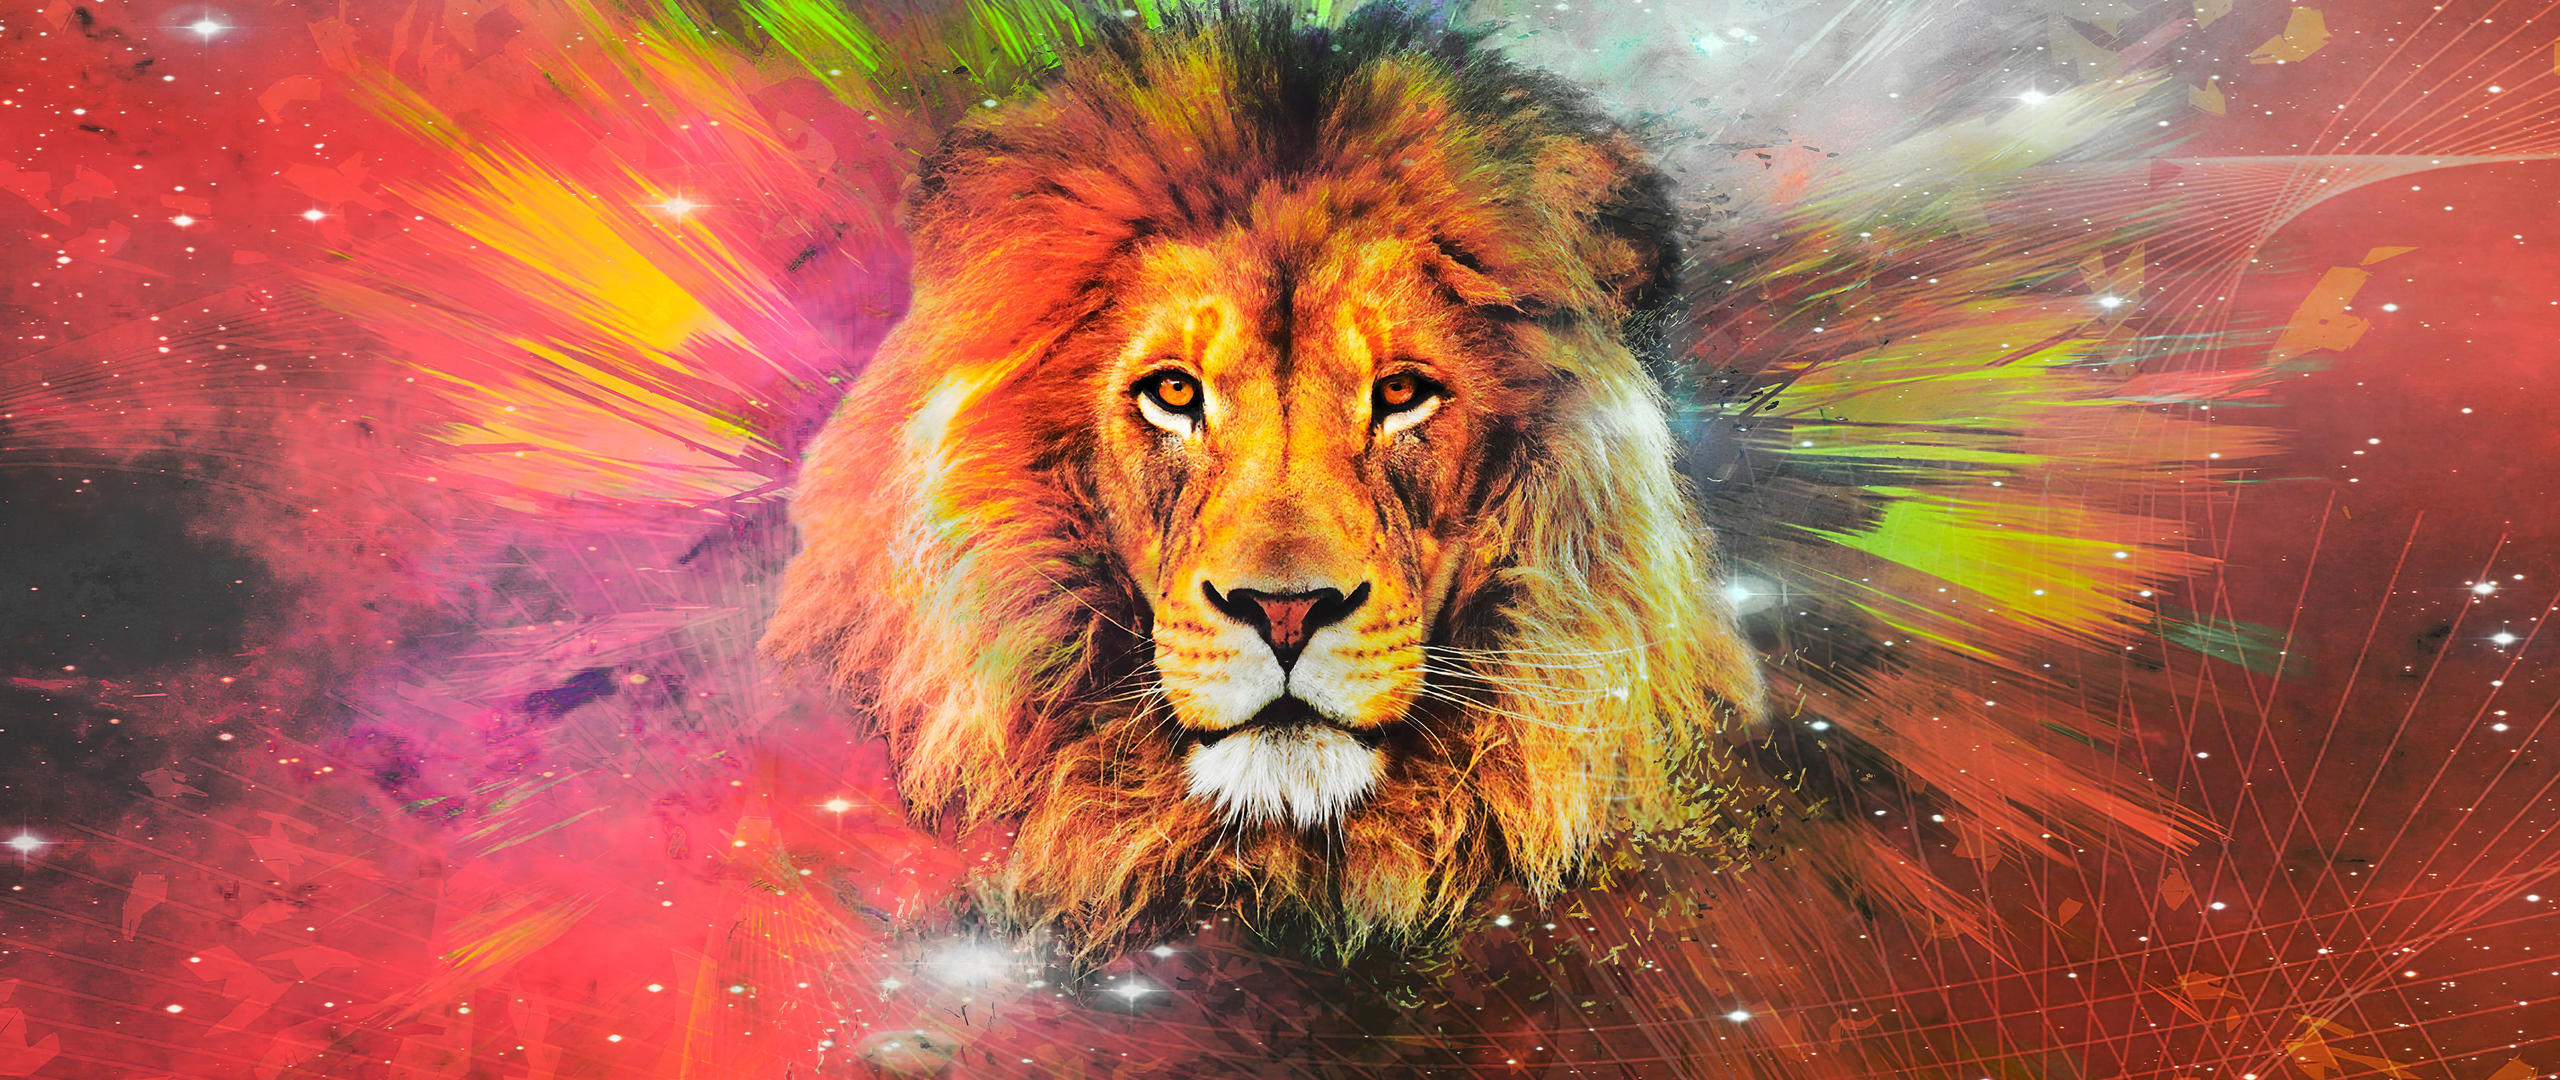 2560x1080 Lion Galaxy Art 4k 2560x1080 Resolution Hd 4k Wallpapers